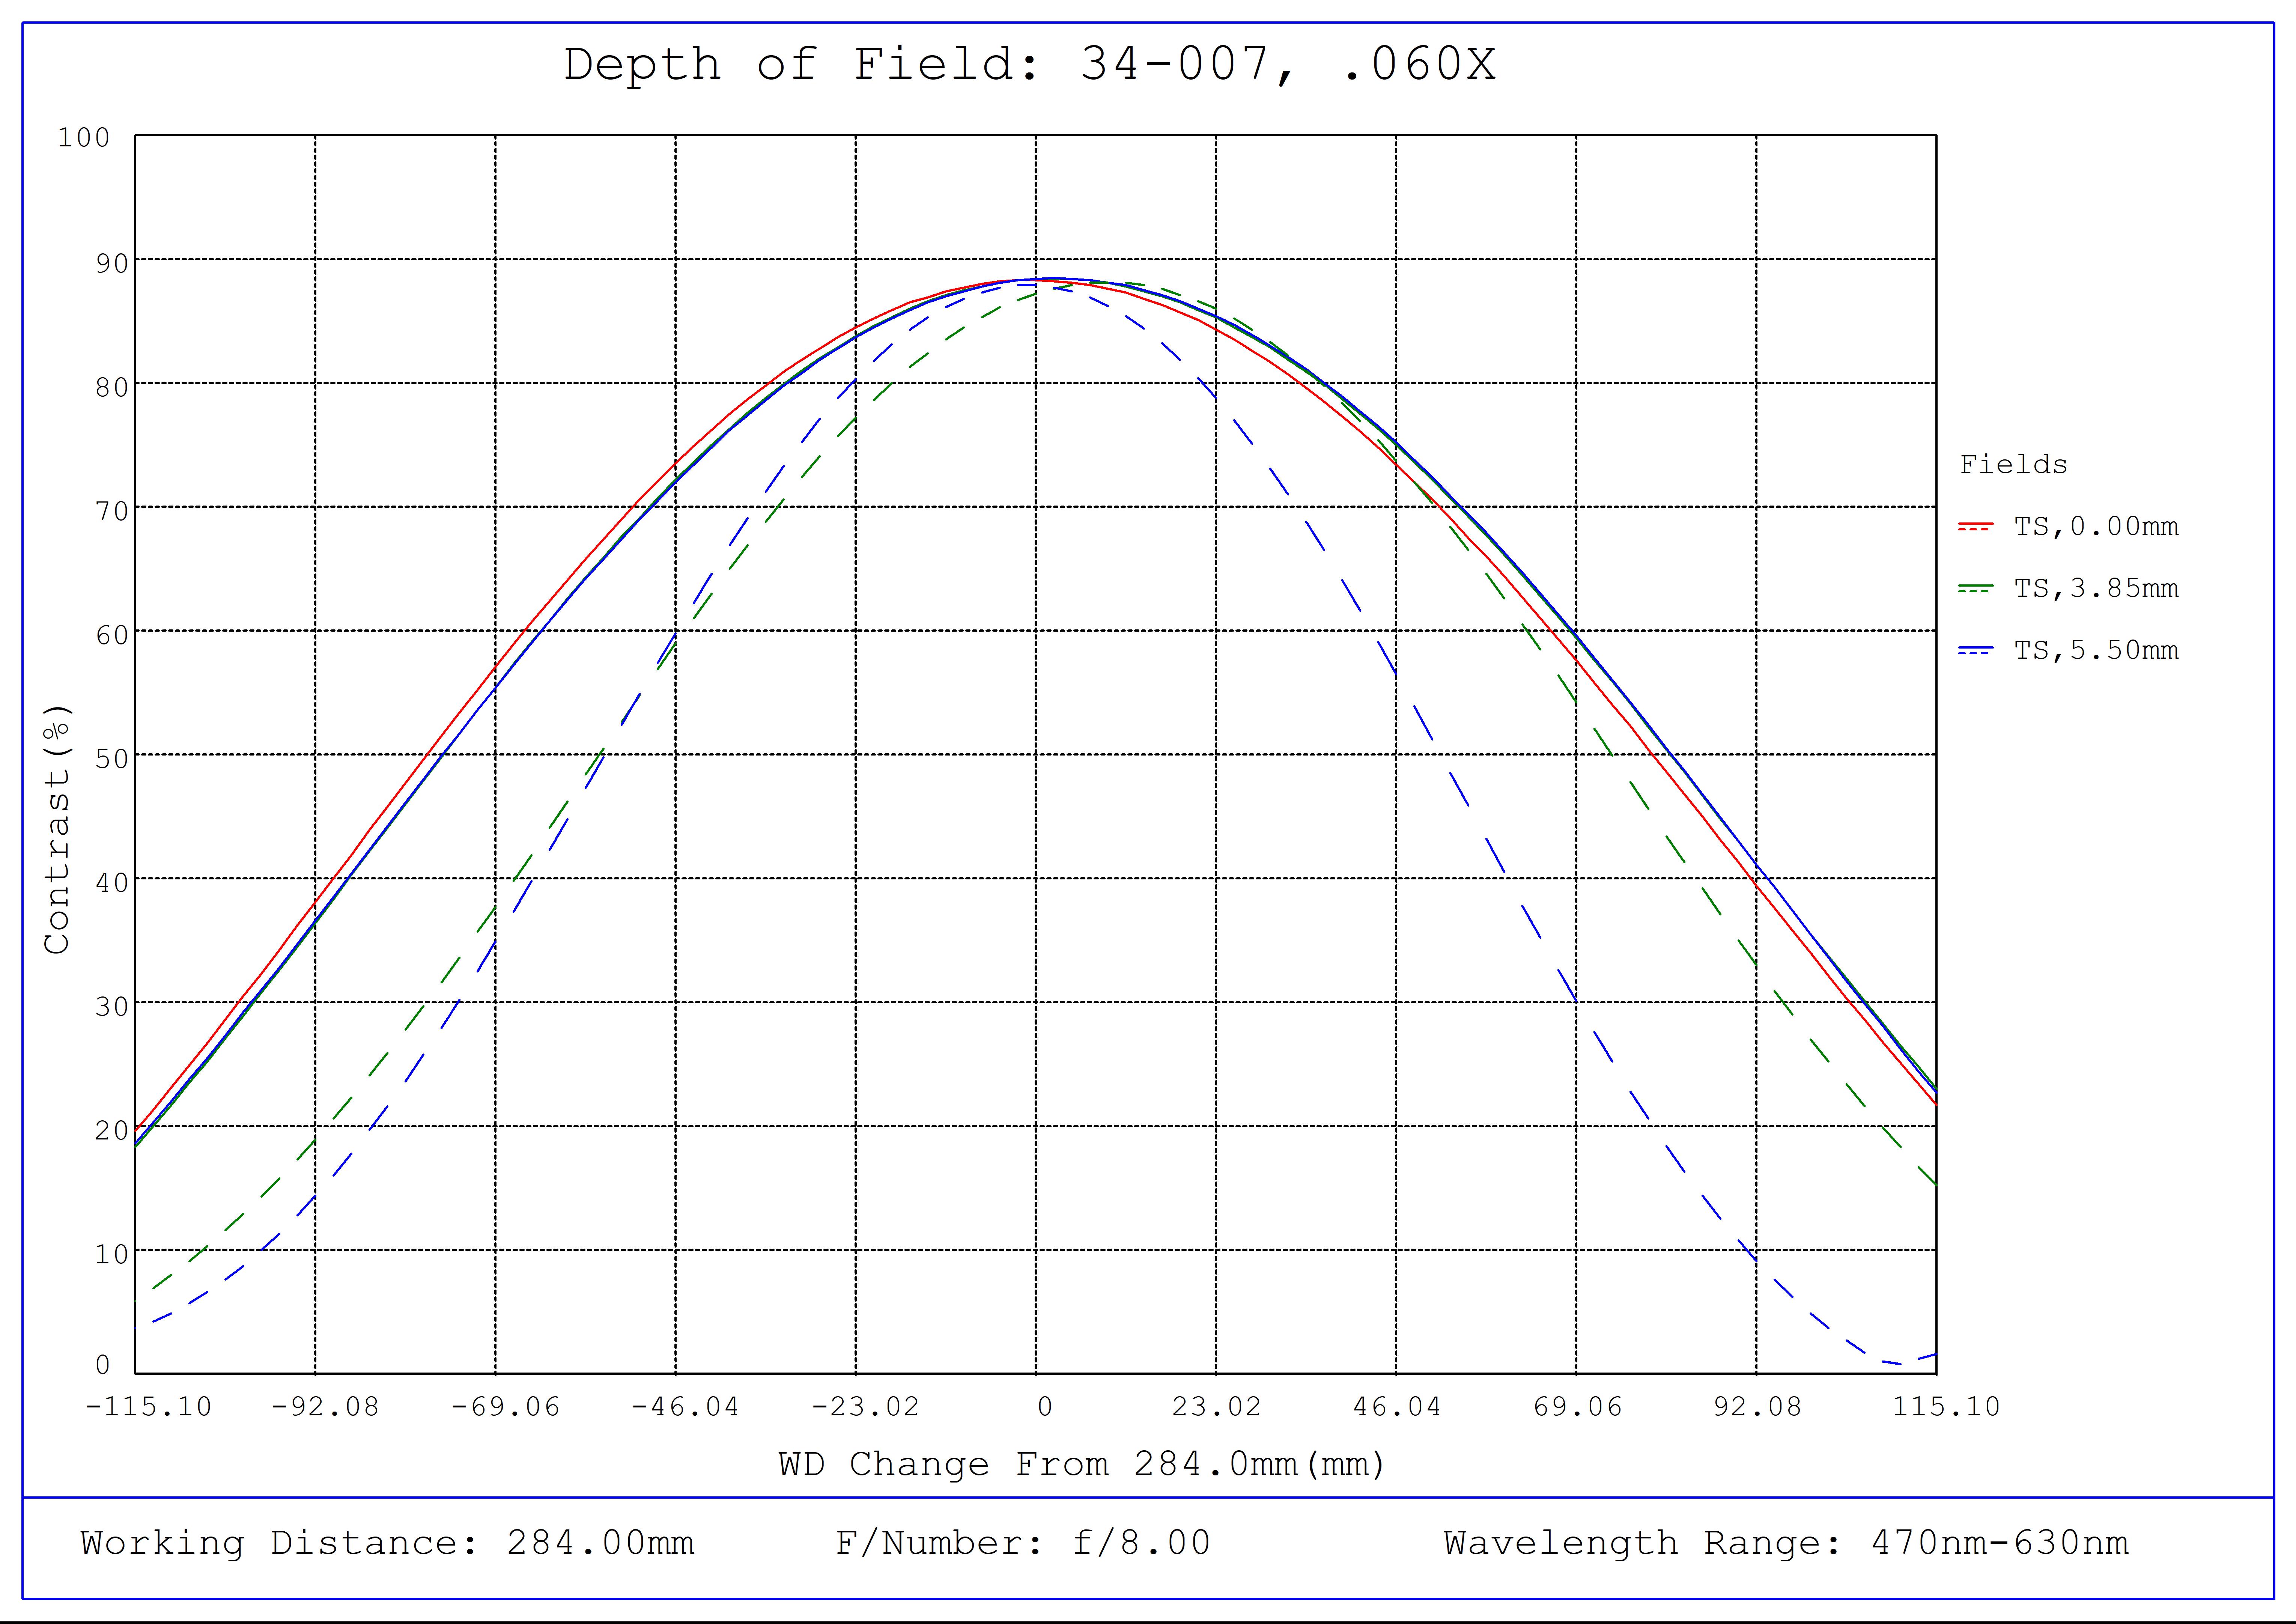 #34-007, 0.060X, 2/3" C-Mount TitanTL® Telecentric Lens, Depth of Field Plot, 284mm Working Distance, f8